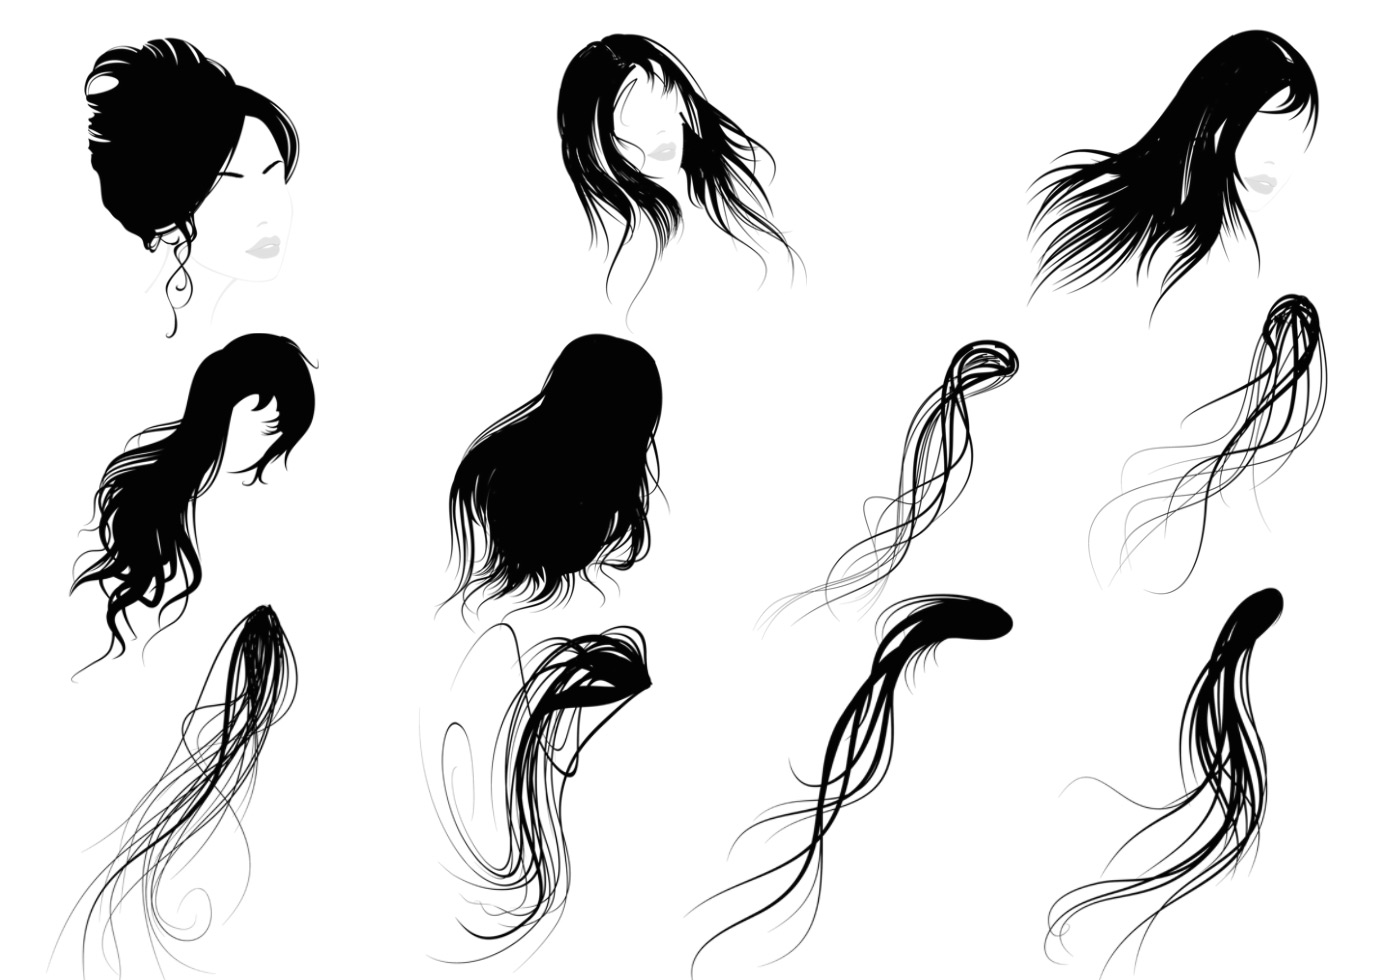 Download Female Hair Vector Pack - Download Free Vectors, Clipart Graphics & Vector Art